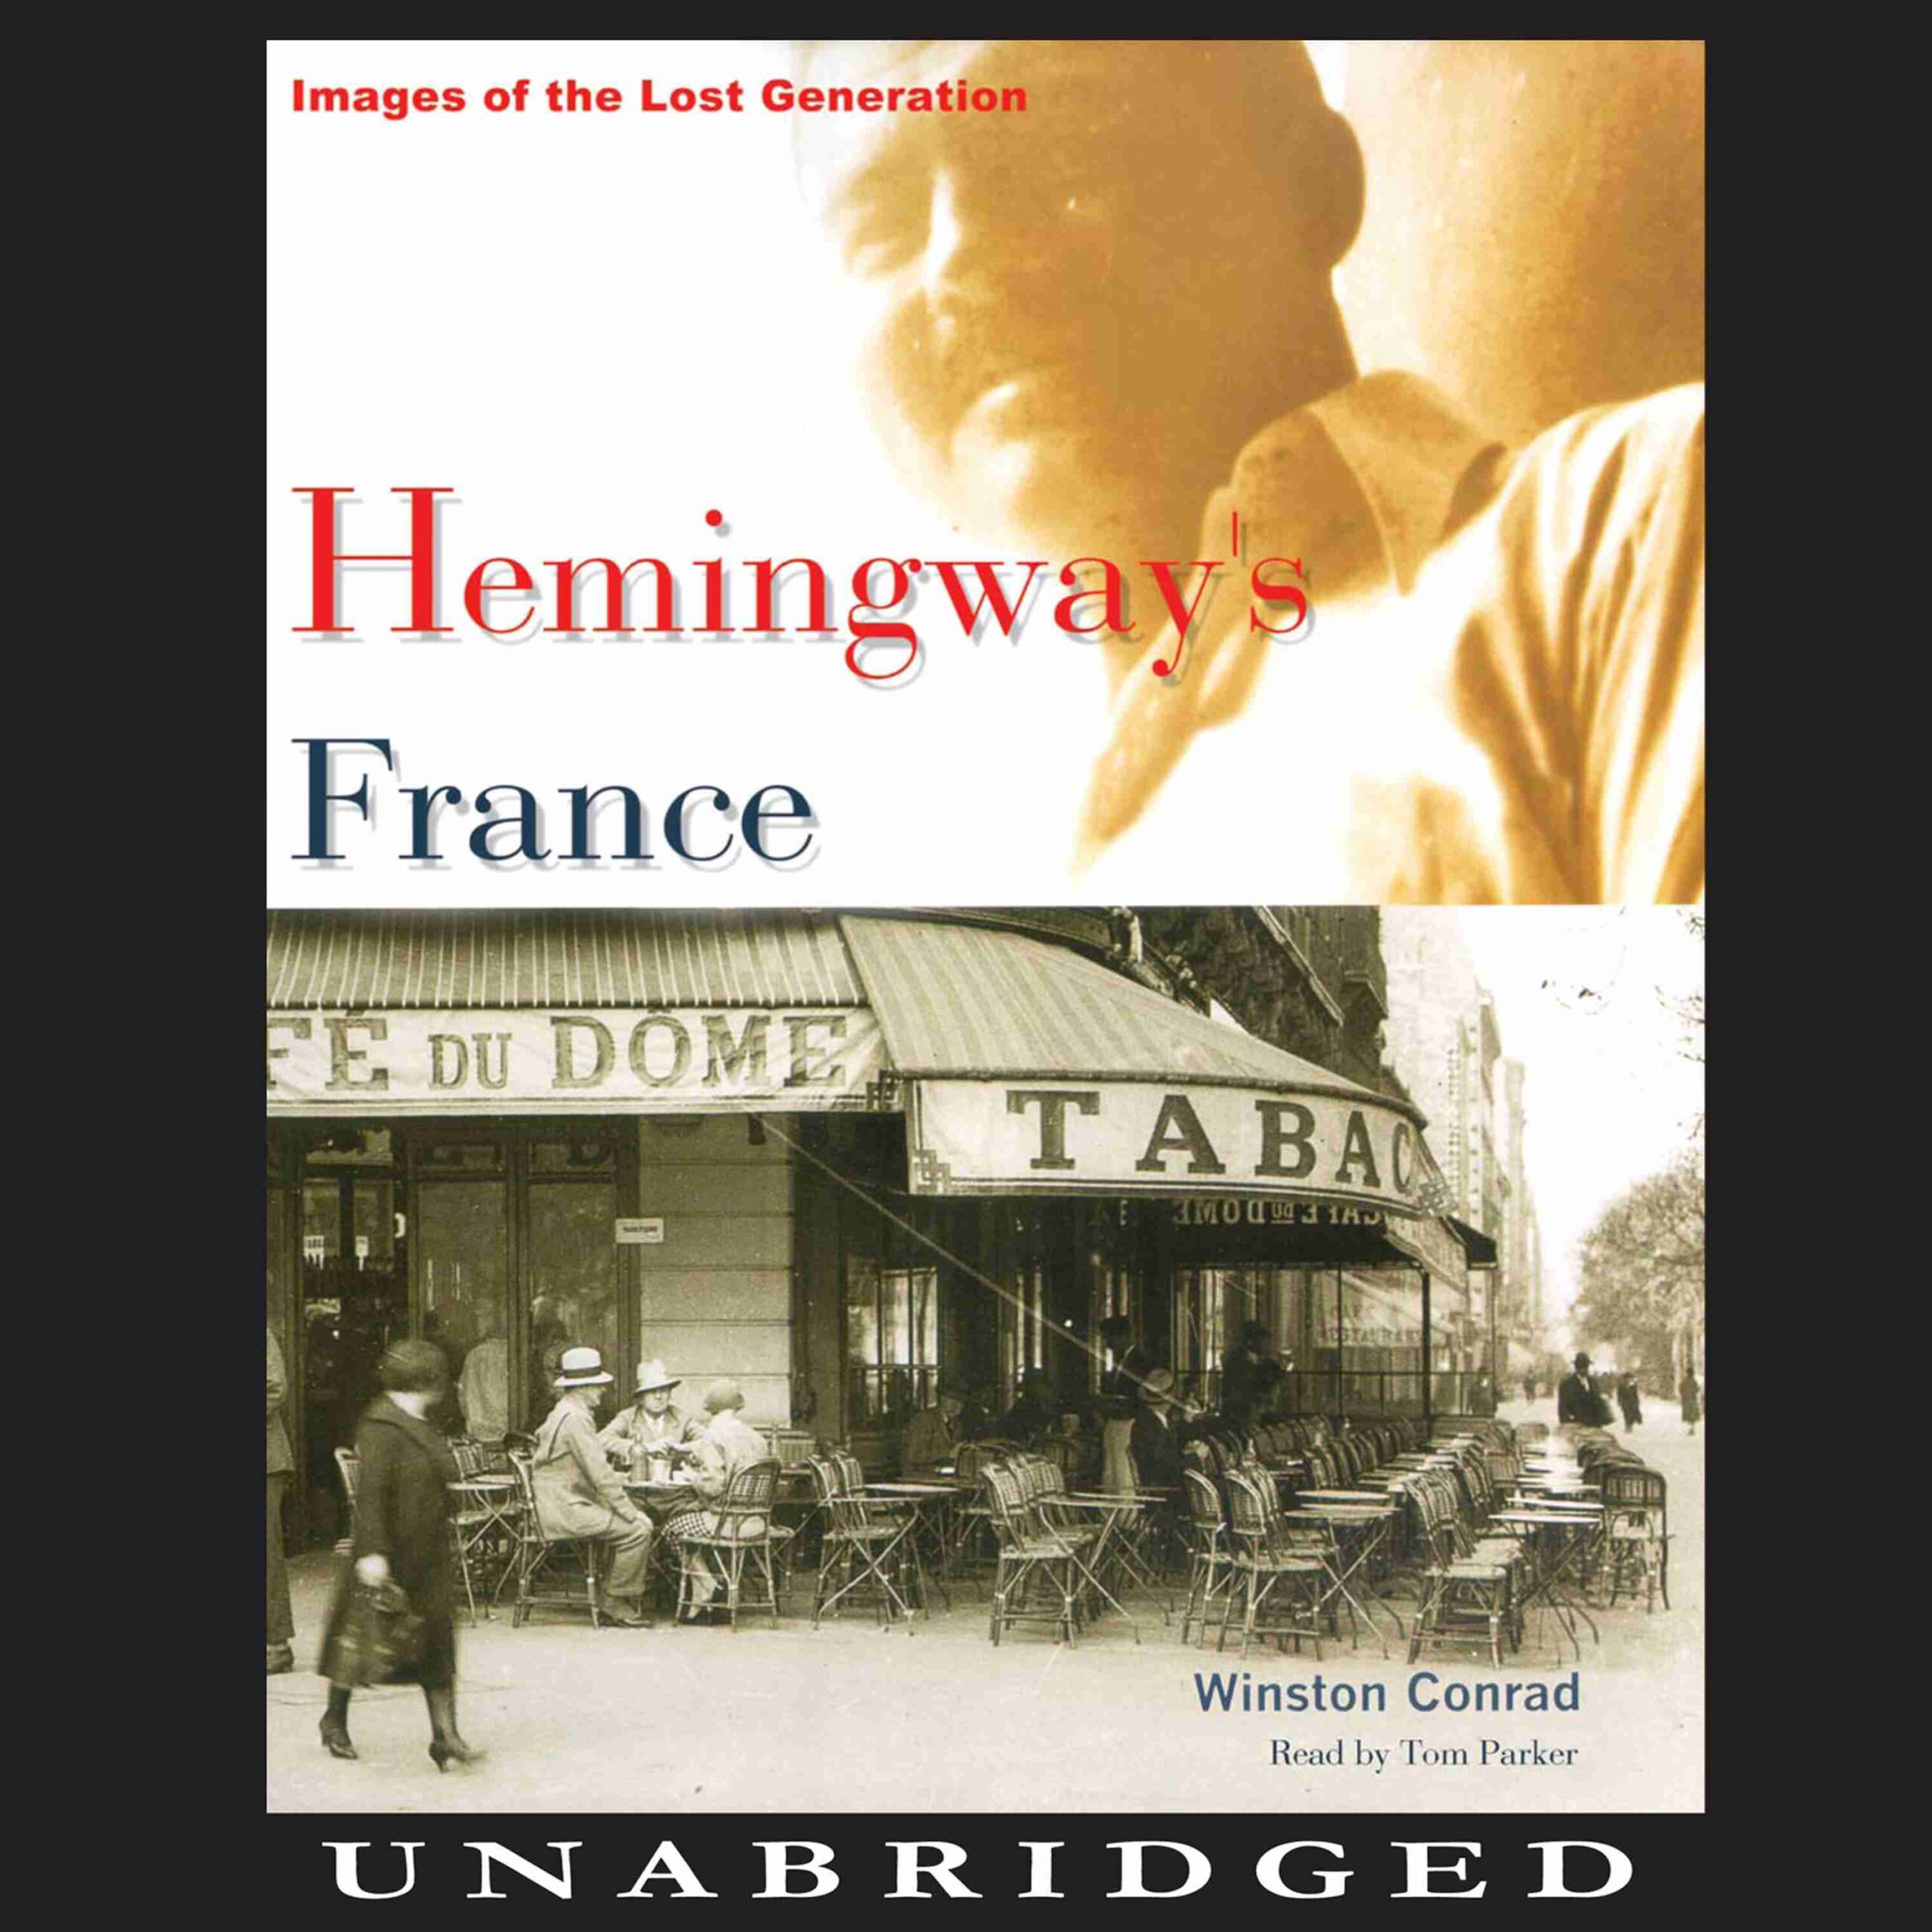 Hemingway’s France byWinston Conrad Audiobook. 9.95 USD